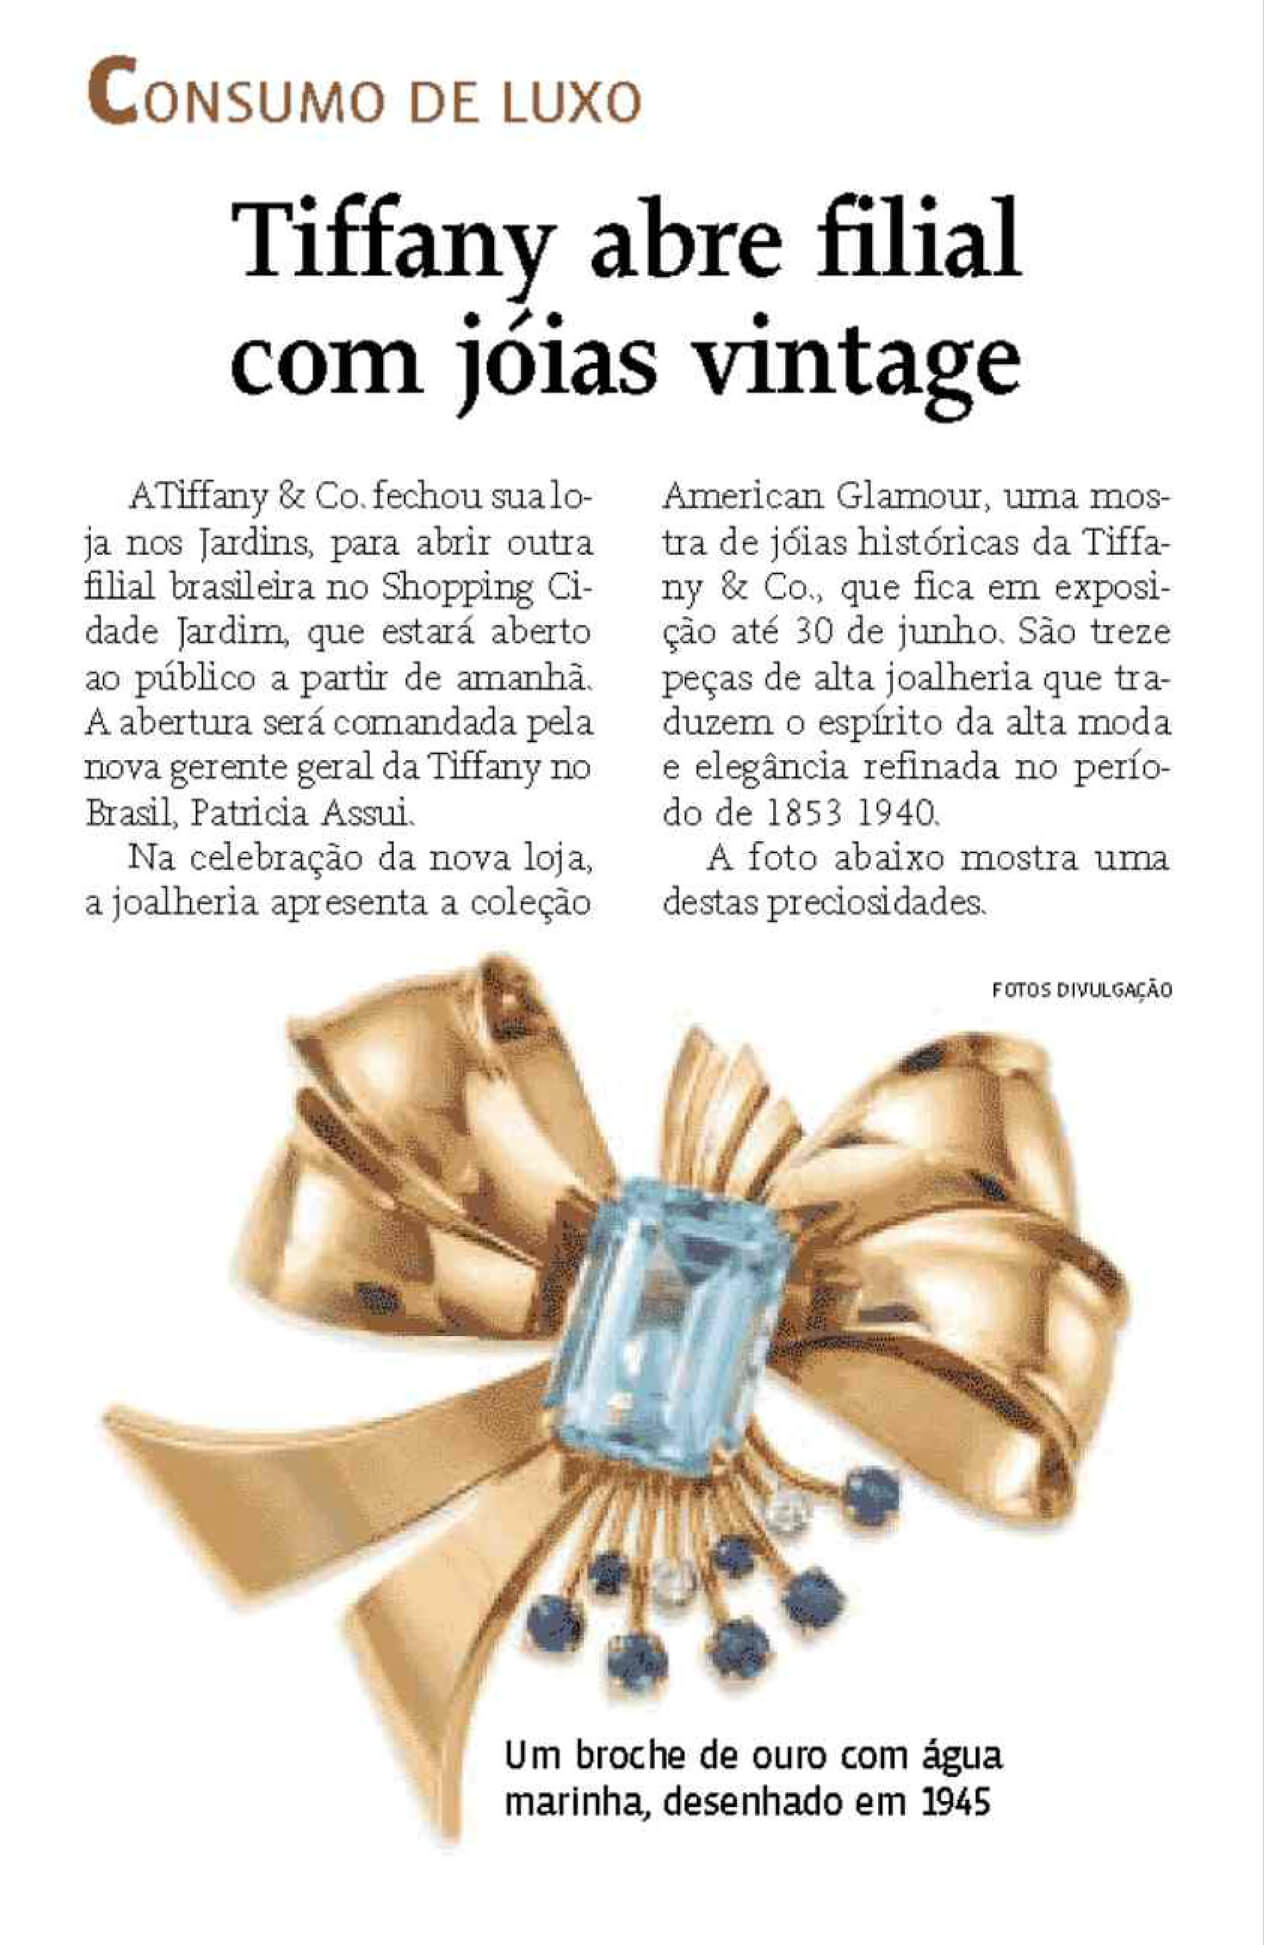 Gazeta Mercantil - Tiffany abre filial com jóias vintage